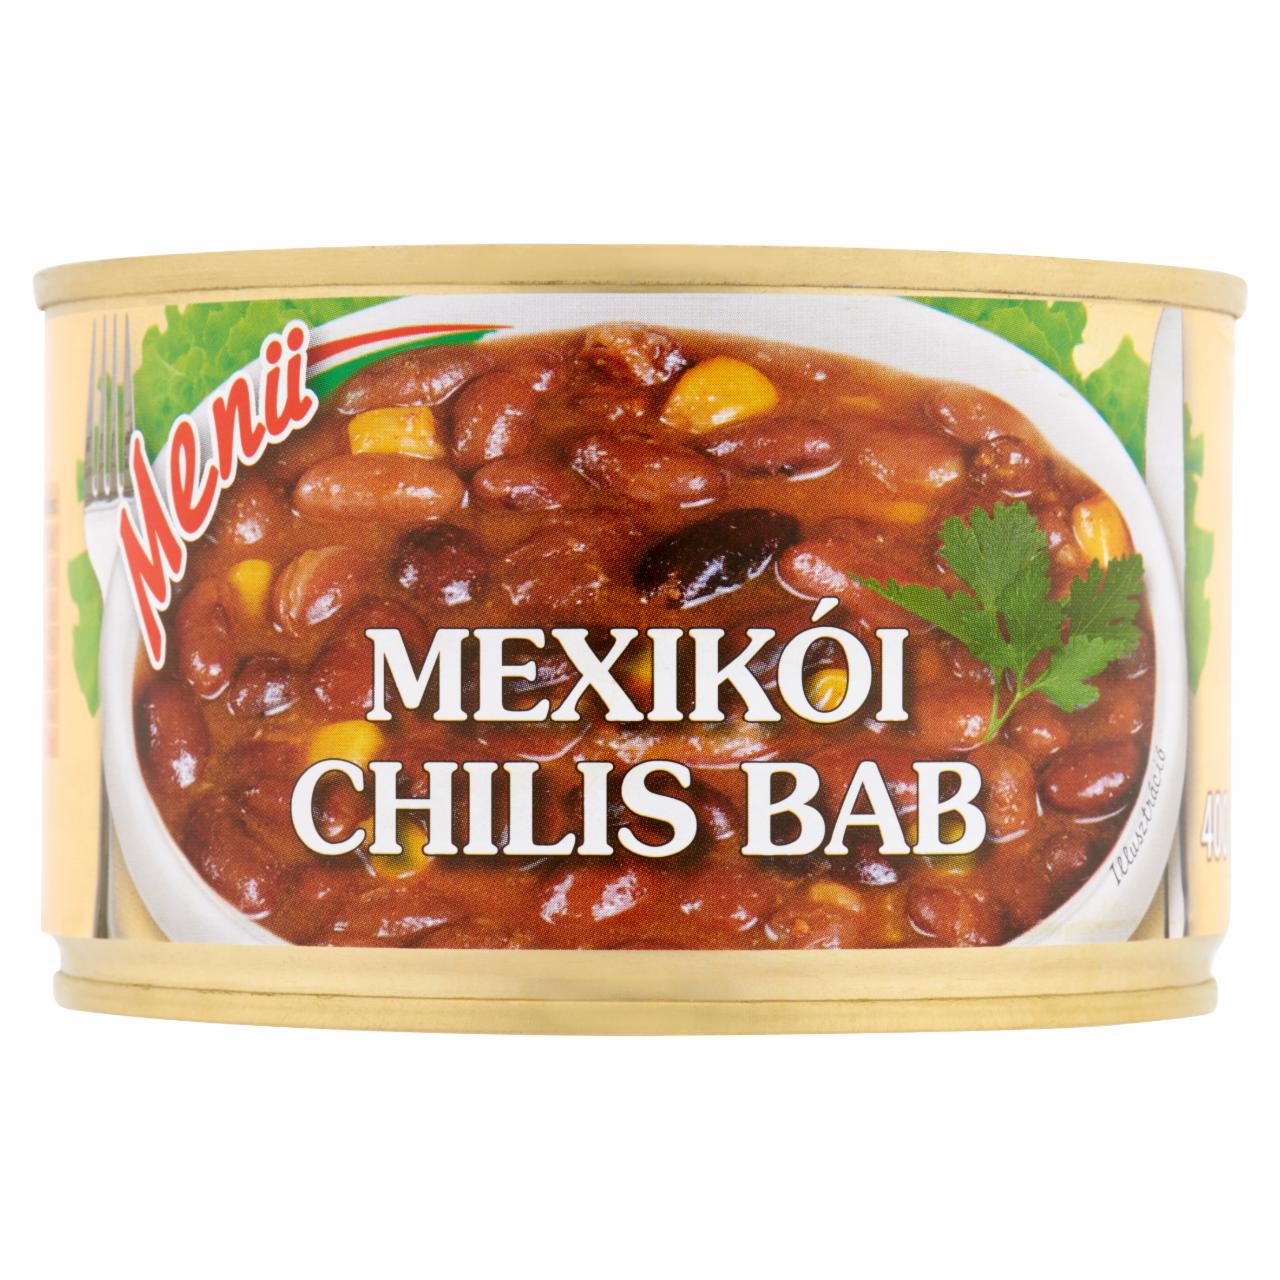 Képek - Menü mexikói chilis bab